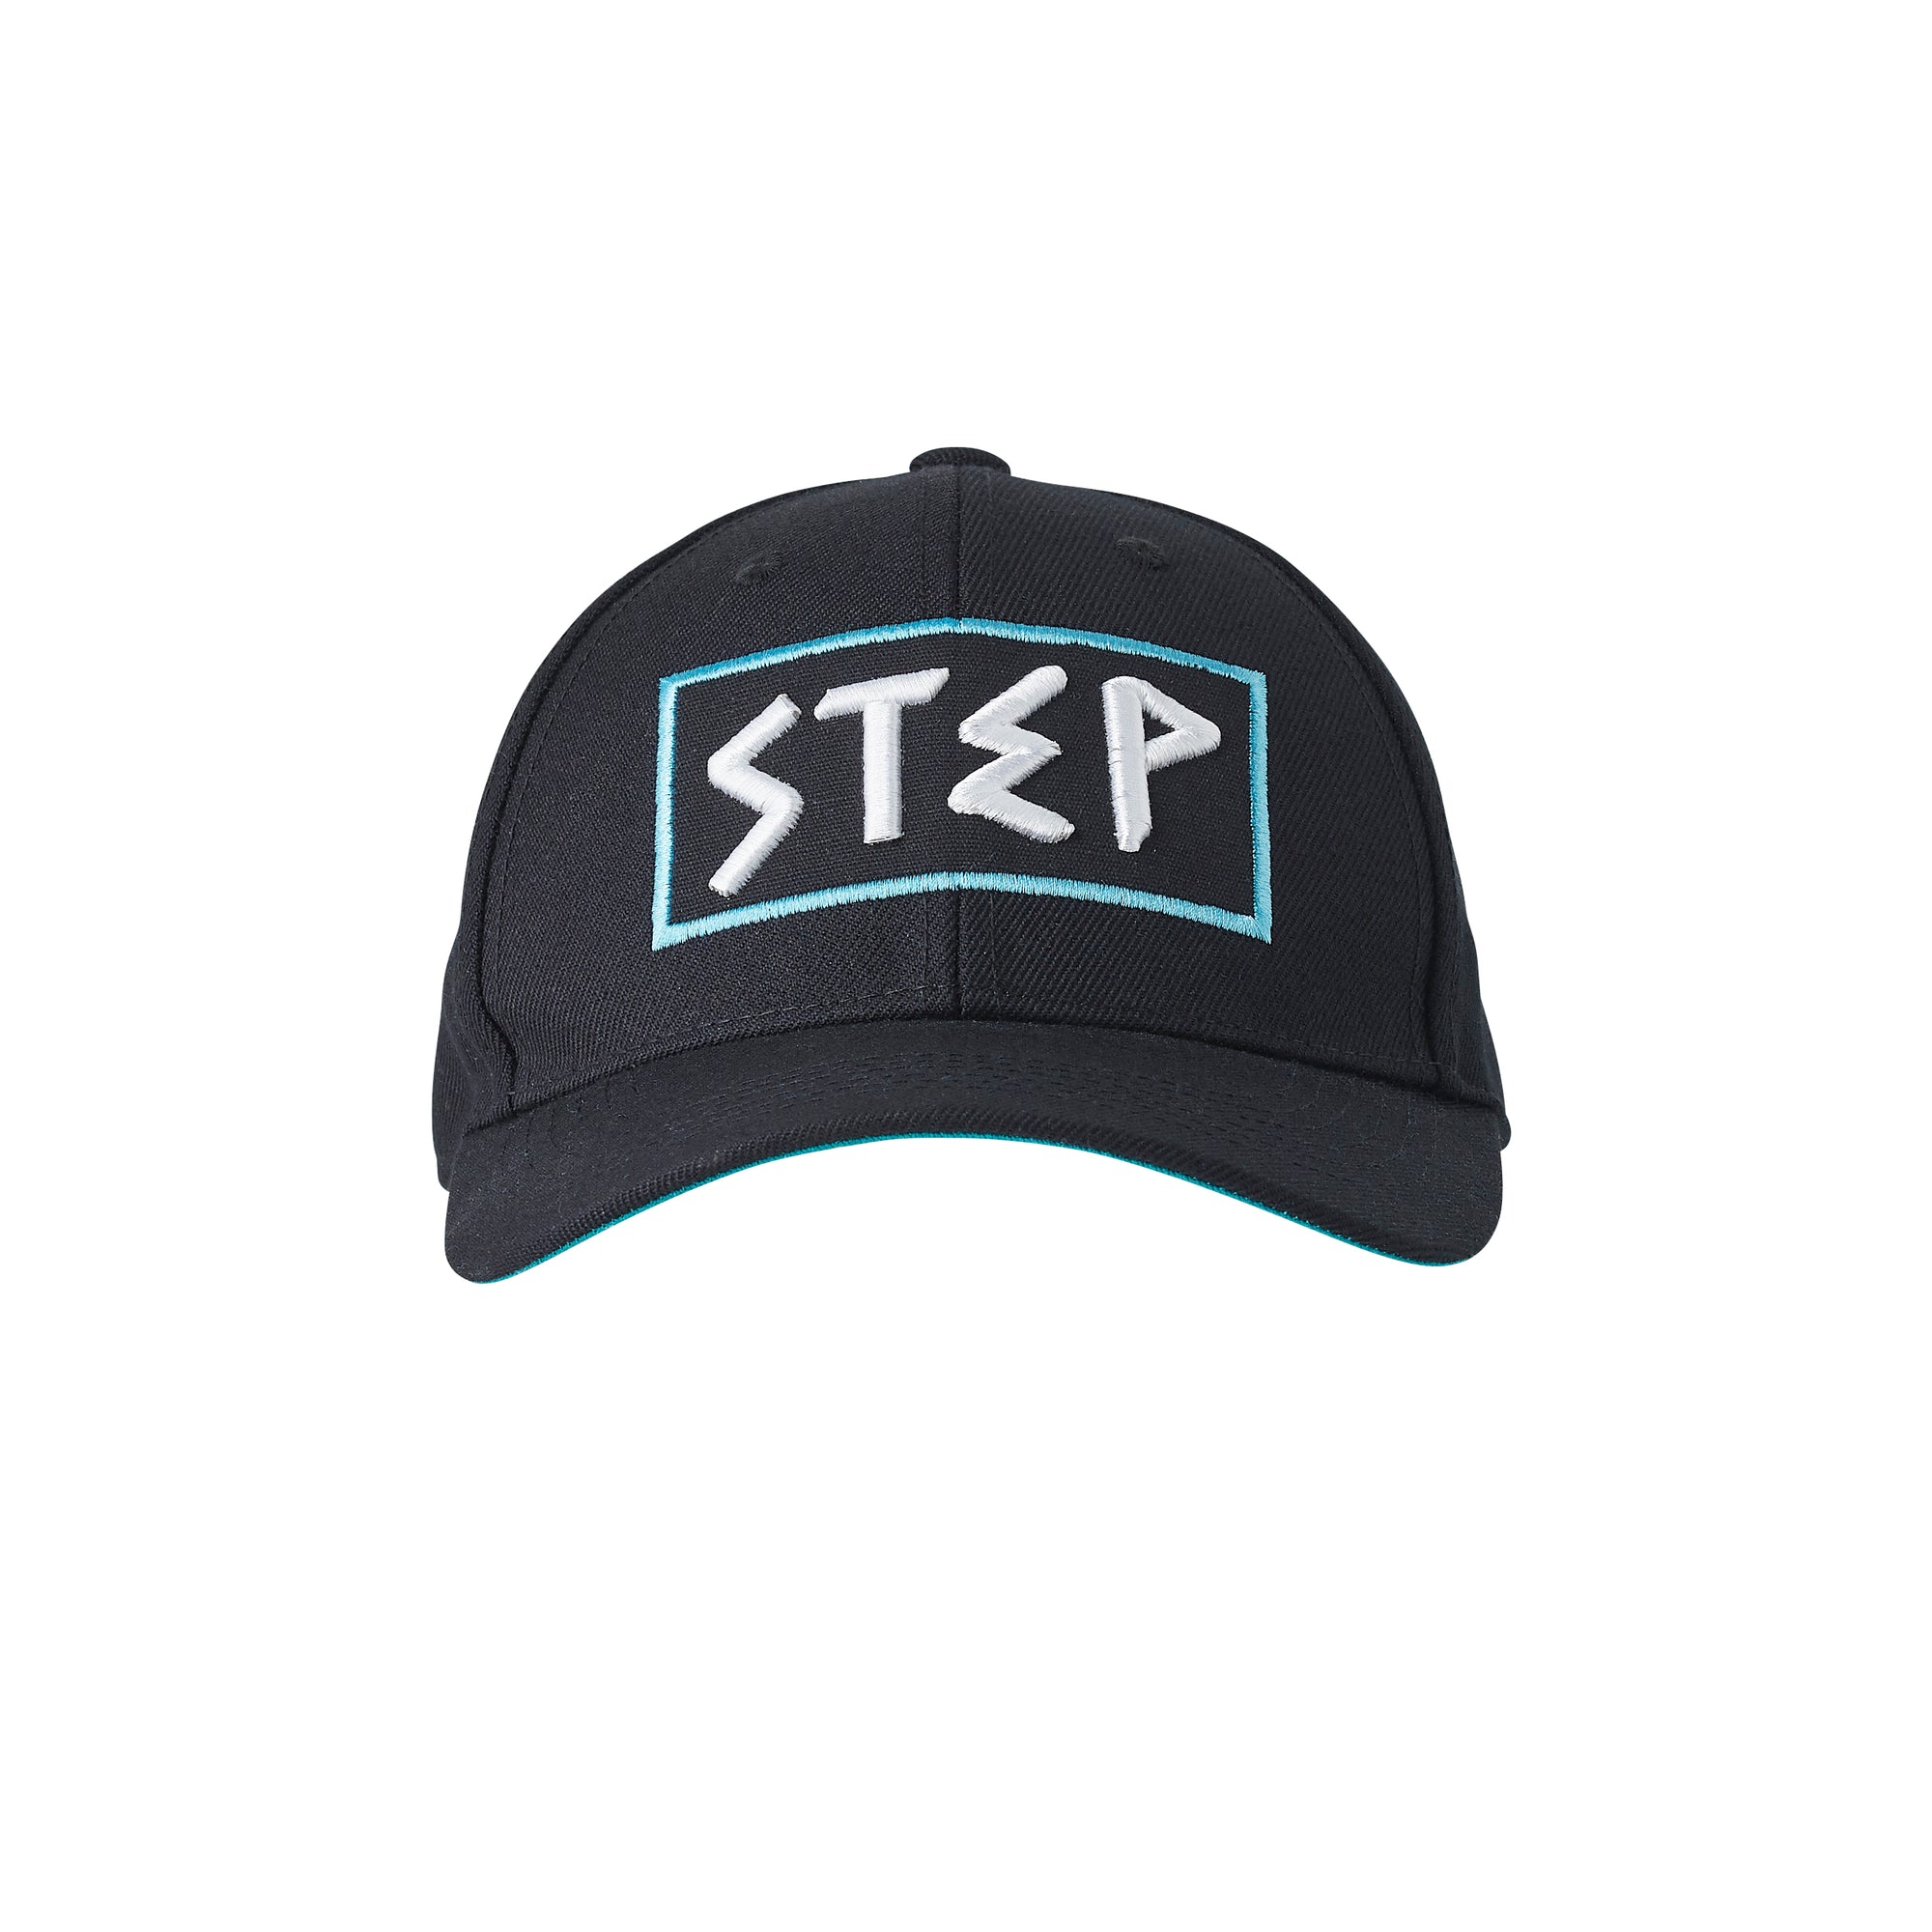 front of mens baseball cap thats balck with step logo 